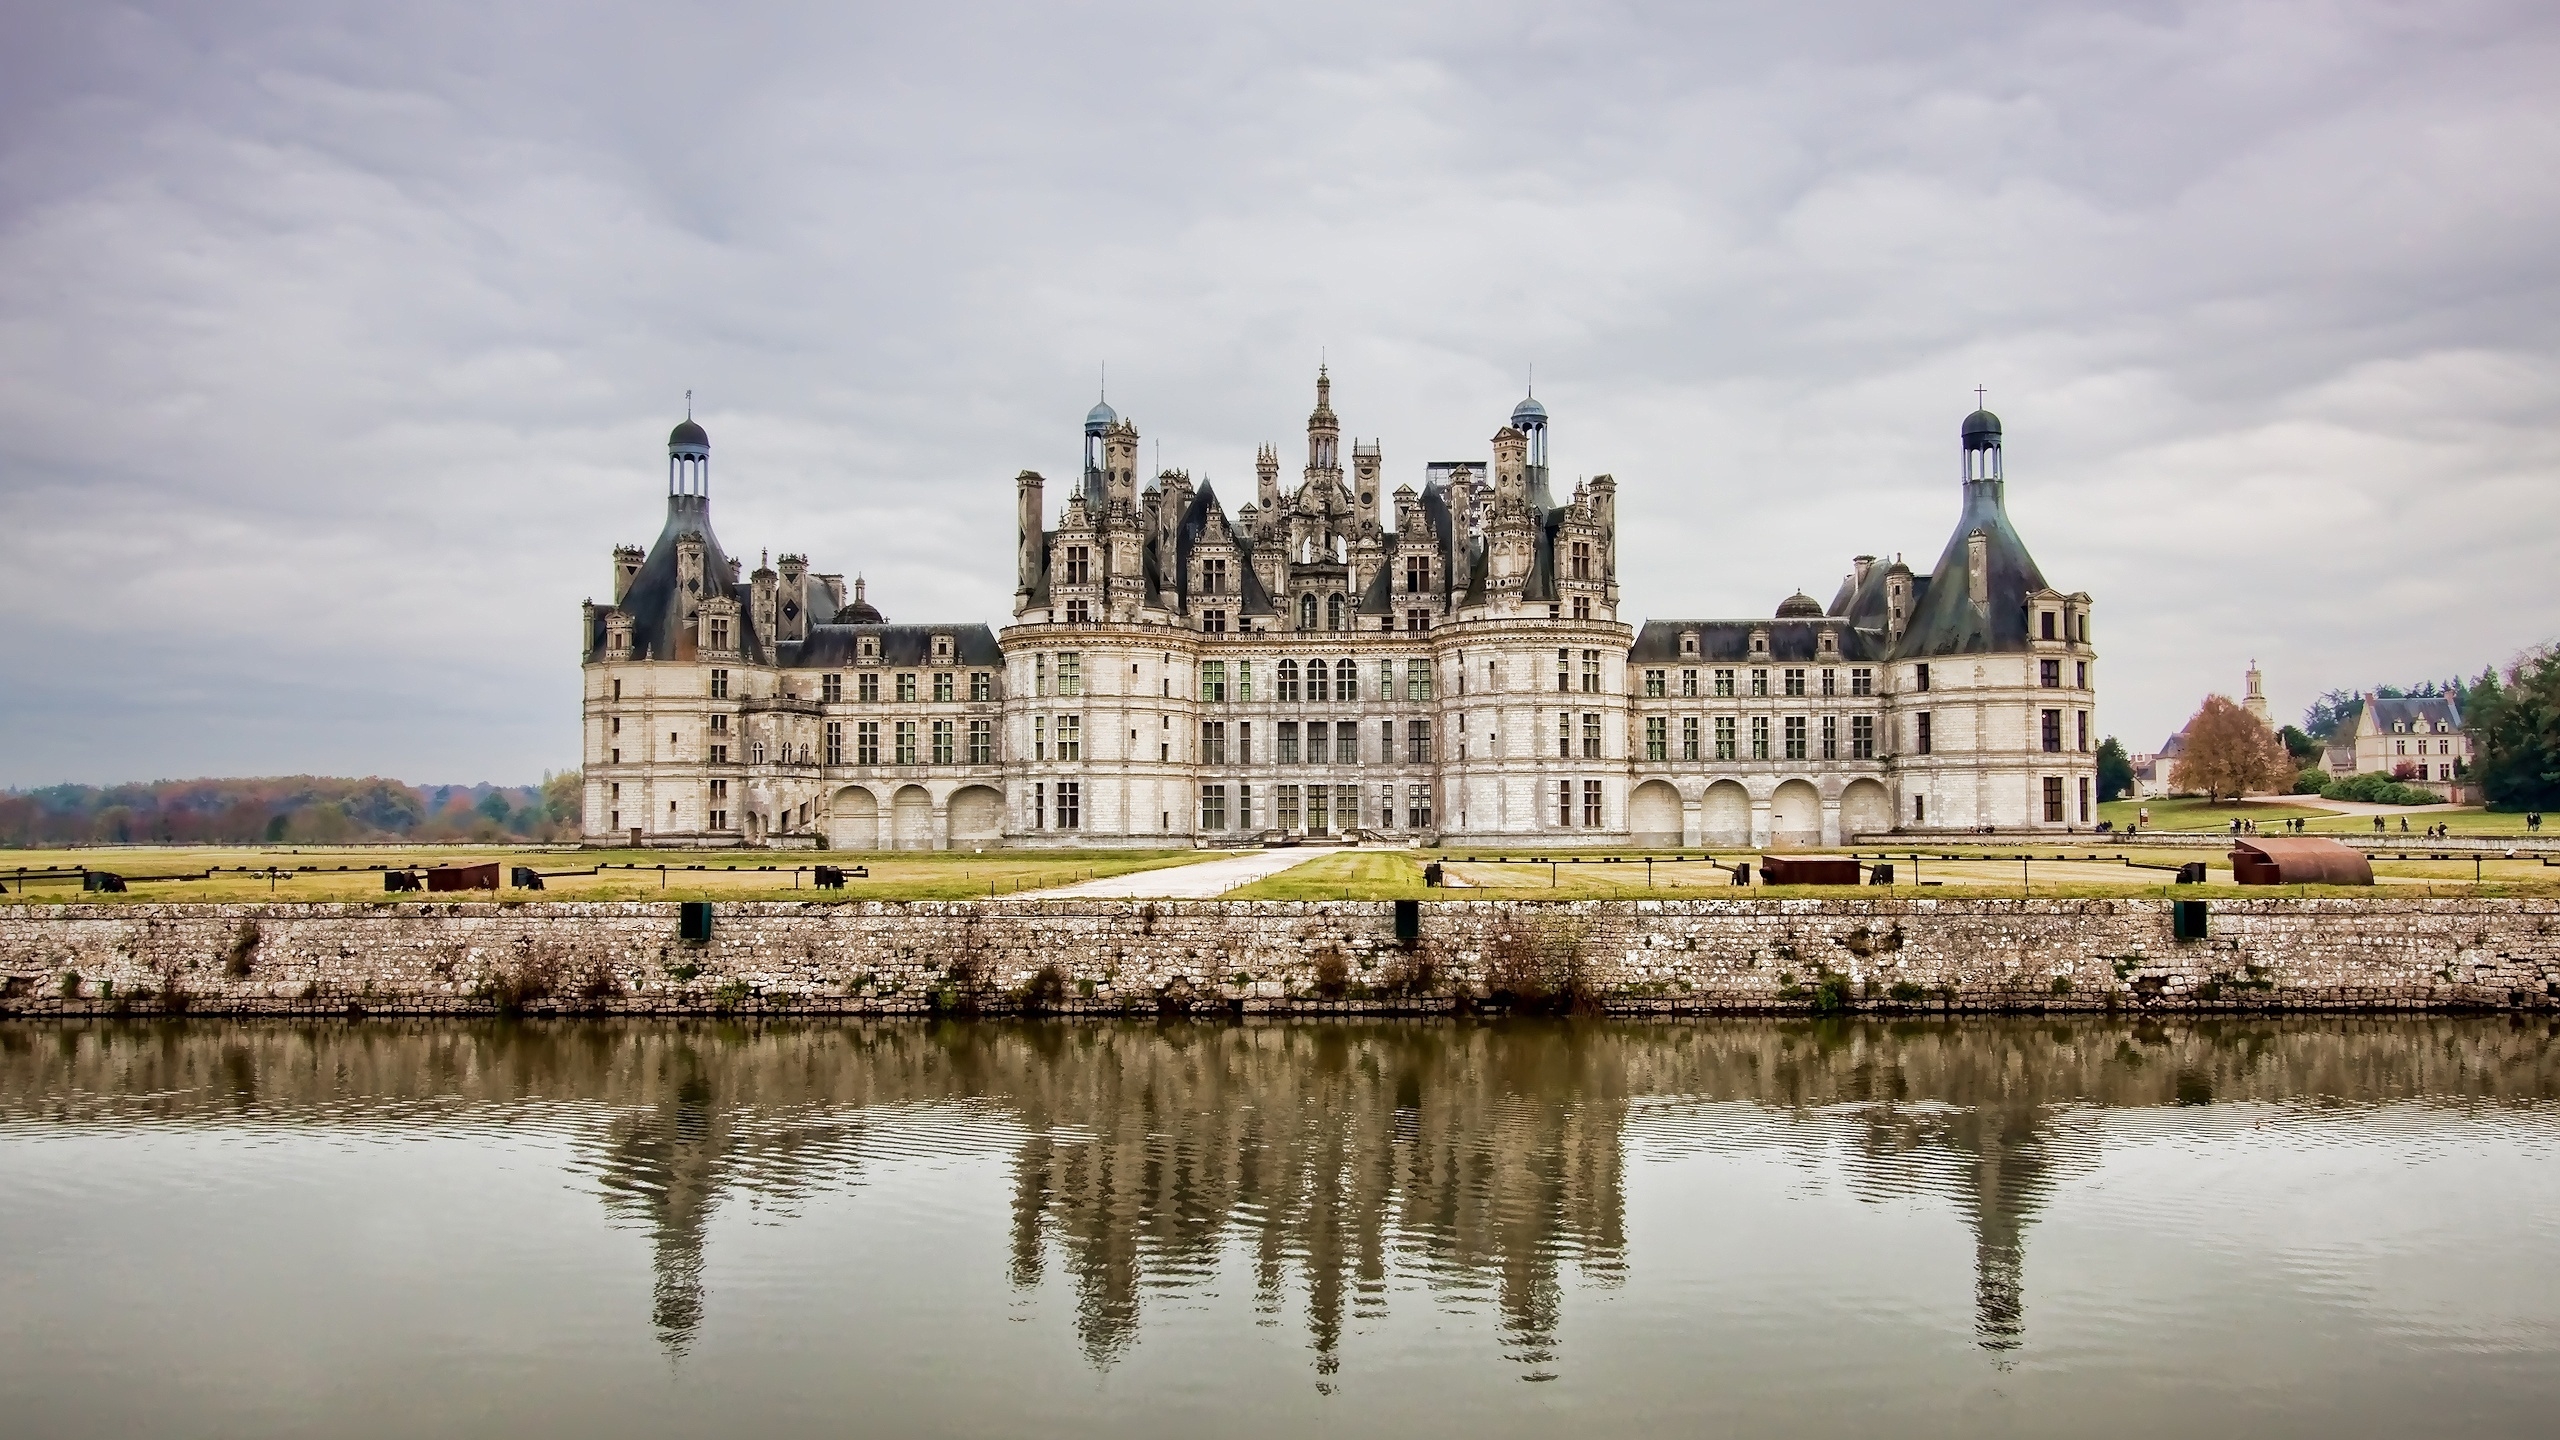 Castle of Chambord for 2560x1440 HDTV resolution